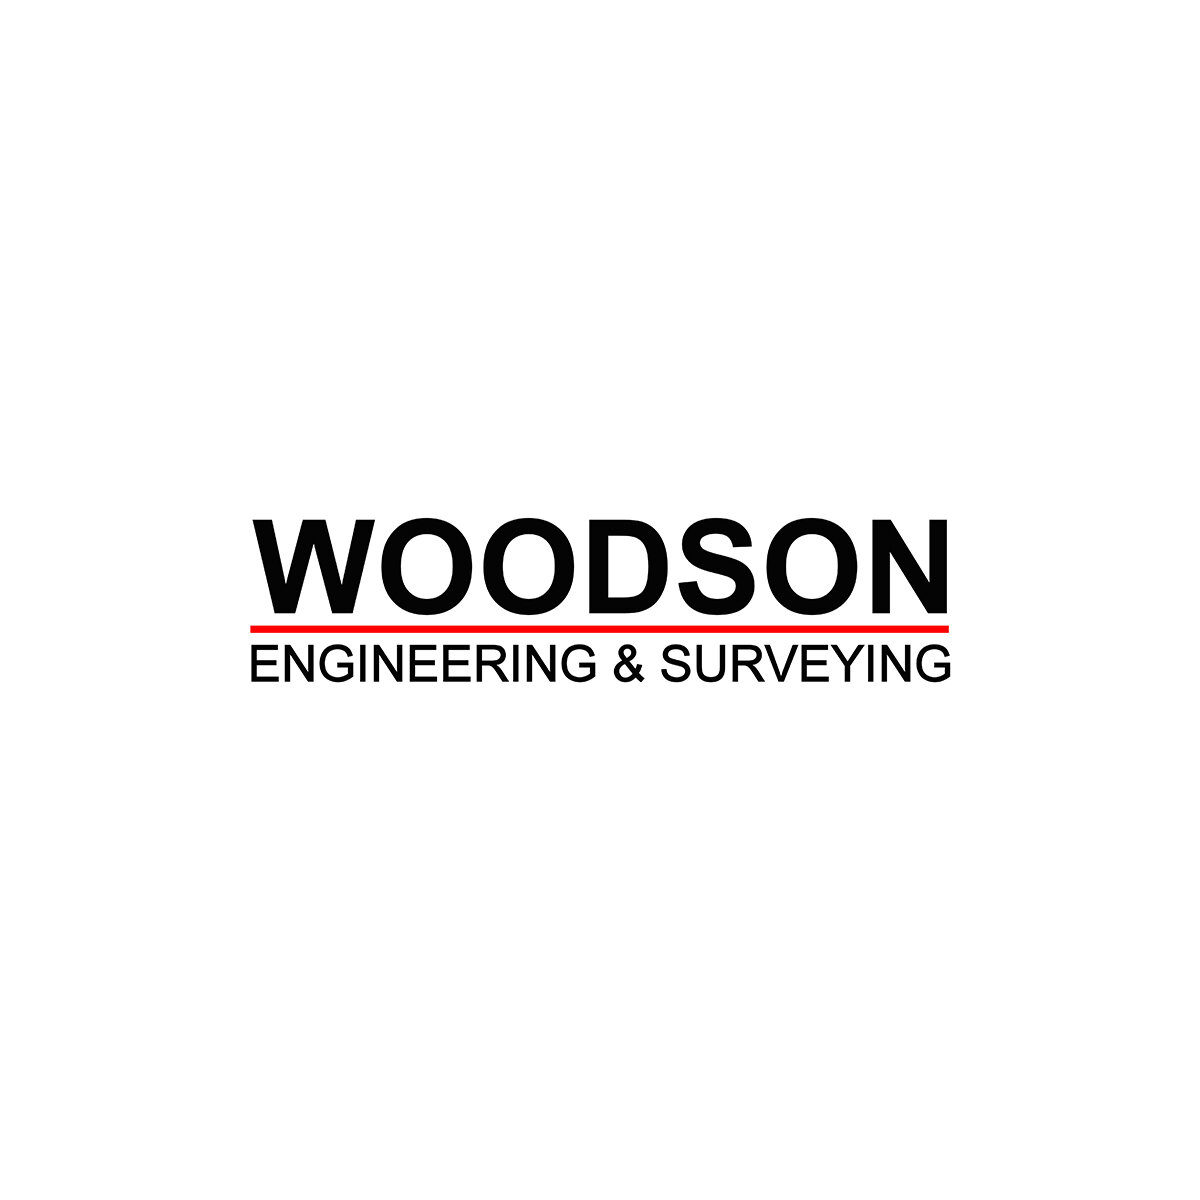 Woodson logo.jpg